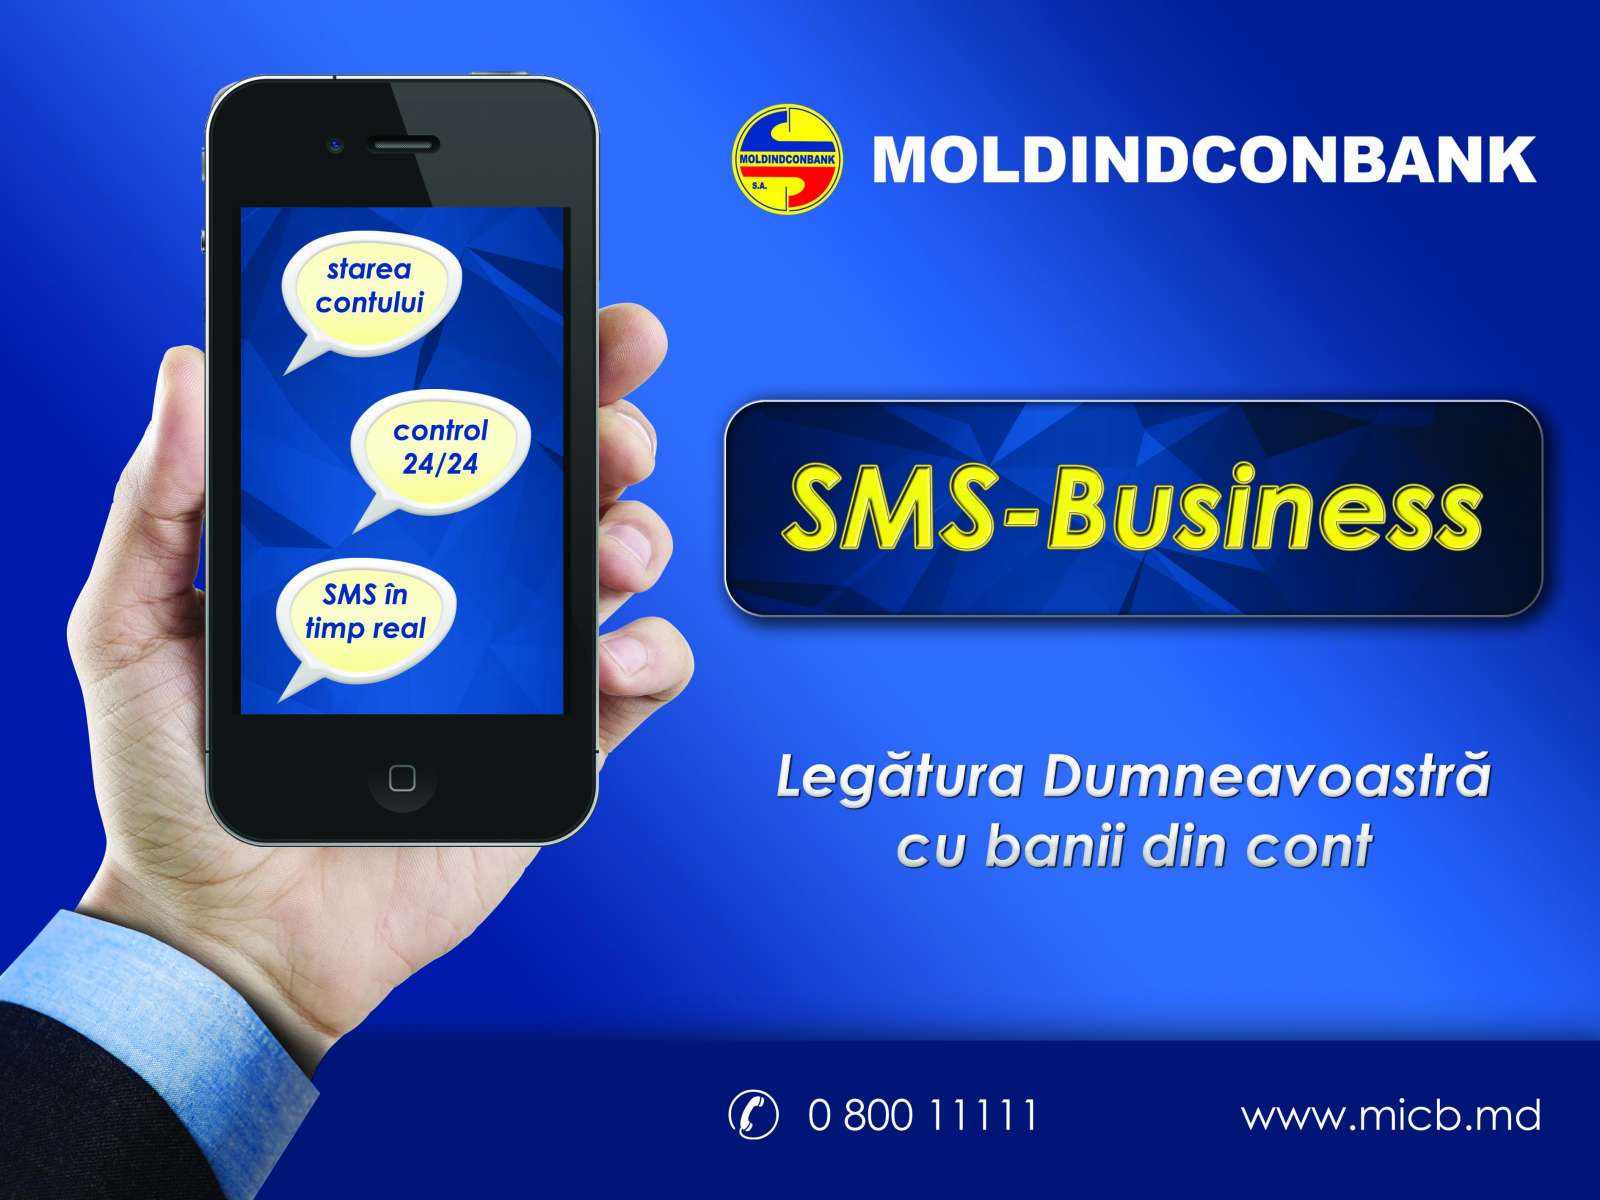 T me sms leads. Бизнес смс. Moldindconbank SMS. Moldindconbank счёт. Деловое SMS.